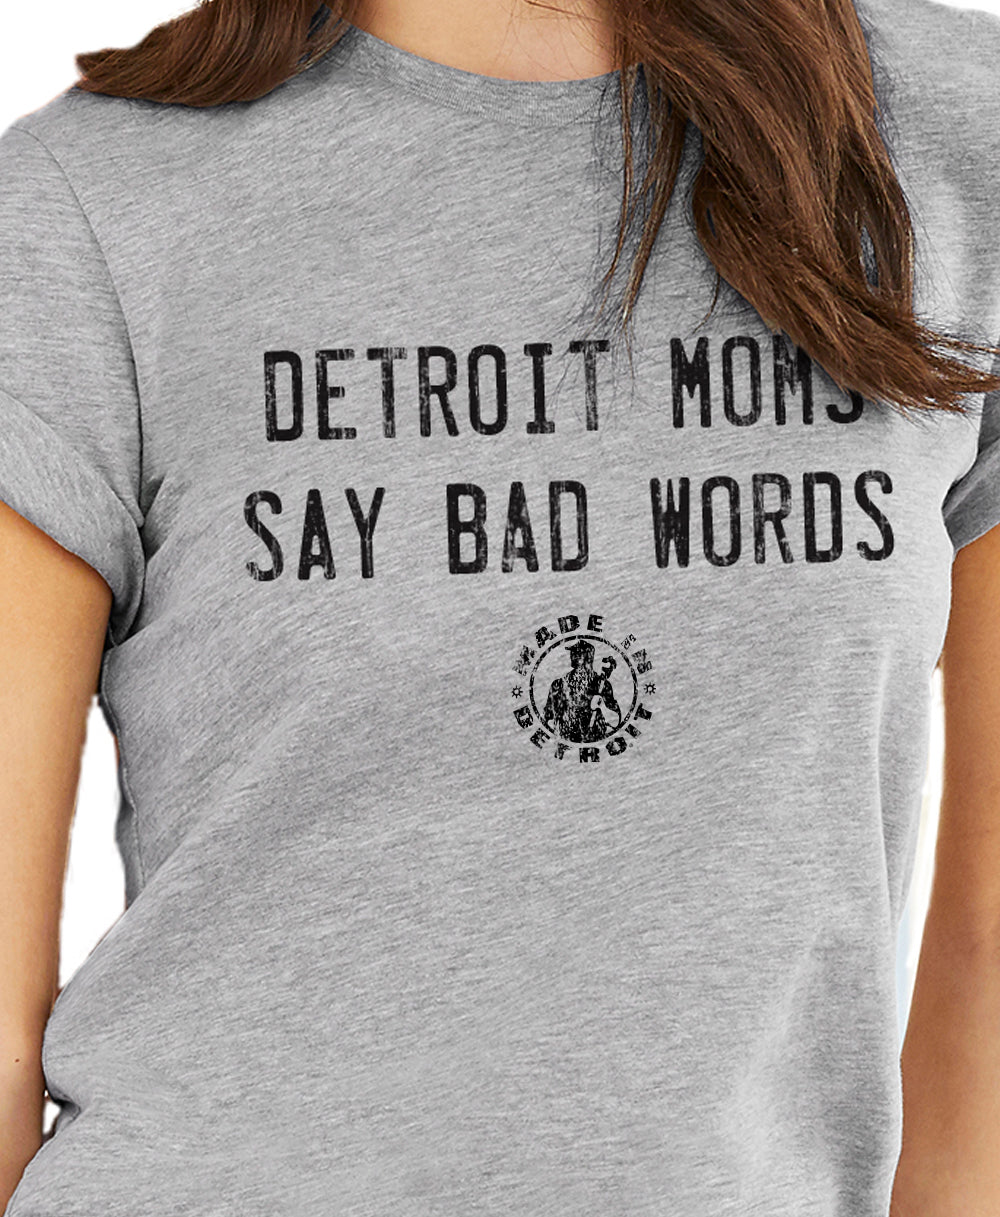 Detroit Moms Say Bad Words - Grey